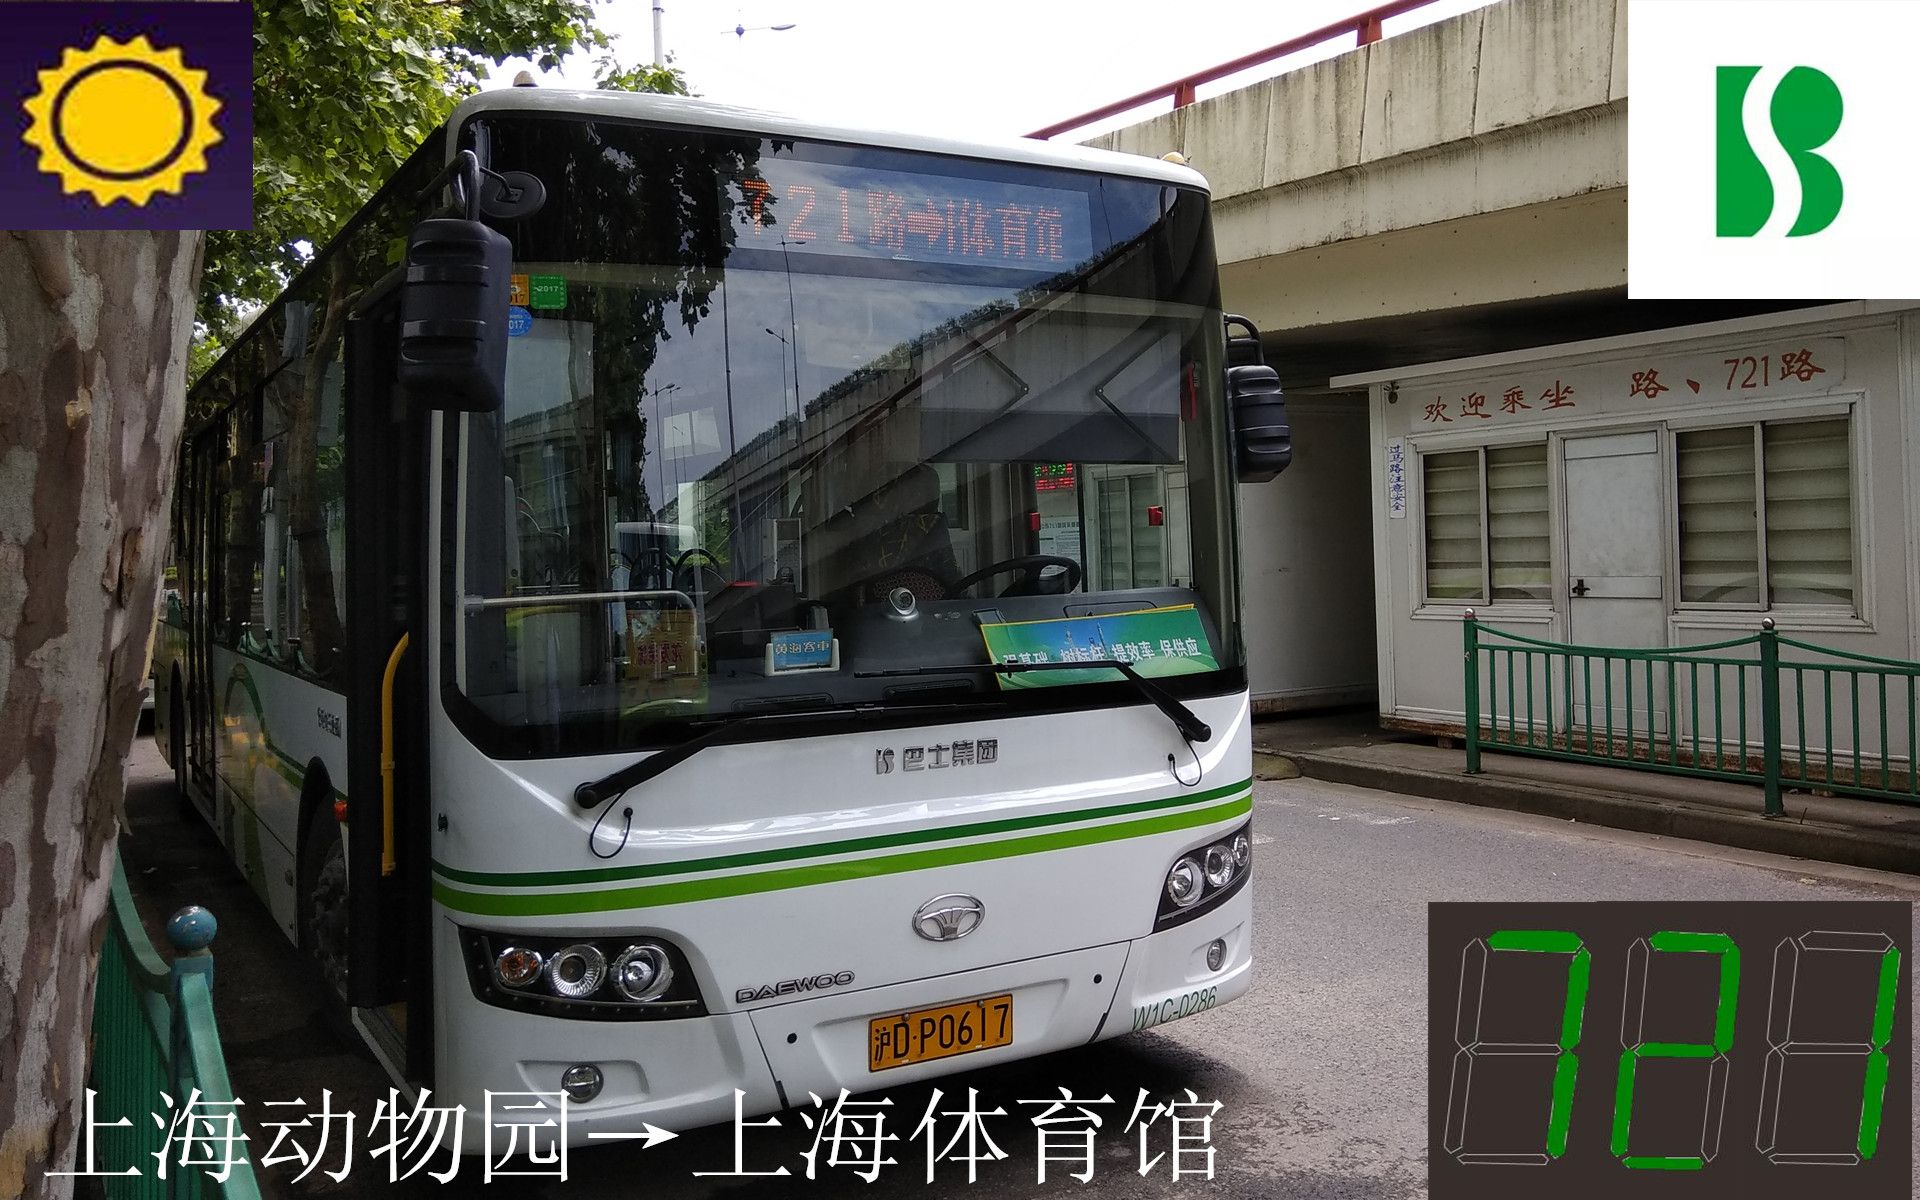 【pov90】 上海巴士三公司 57路 愚园路胶州路→龙柏新村 车头pov_哔哩哔哩_bilibili